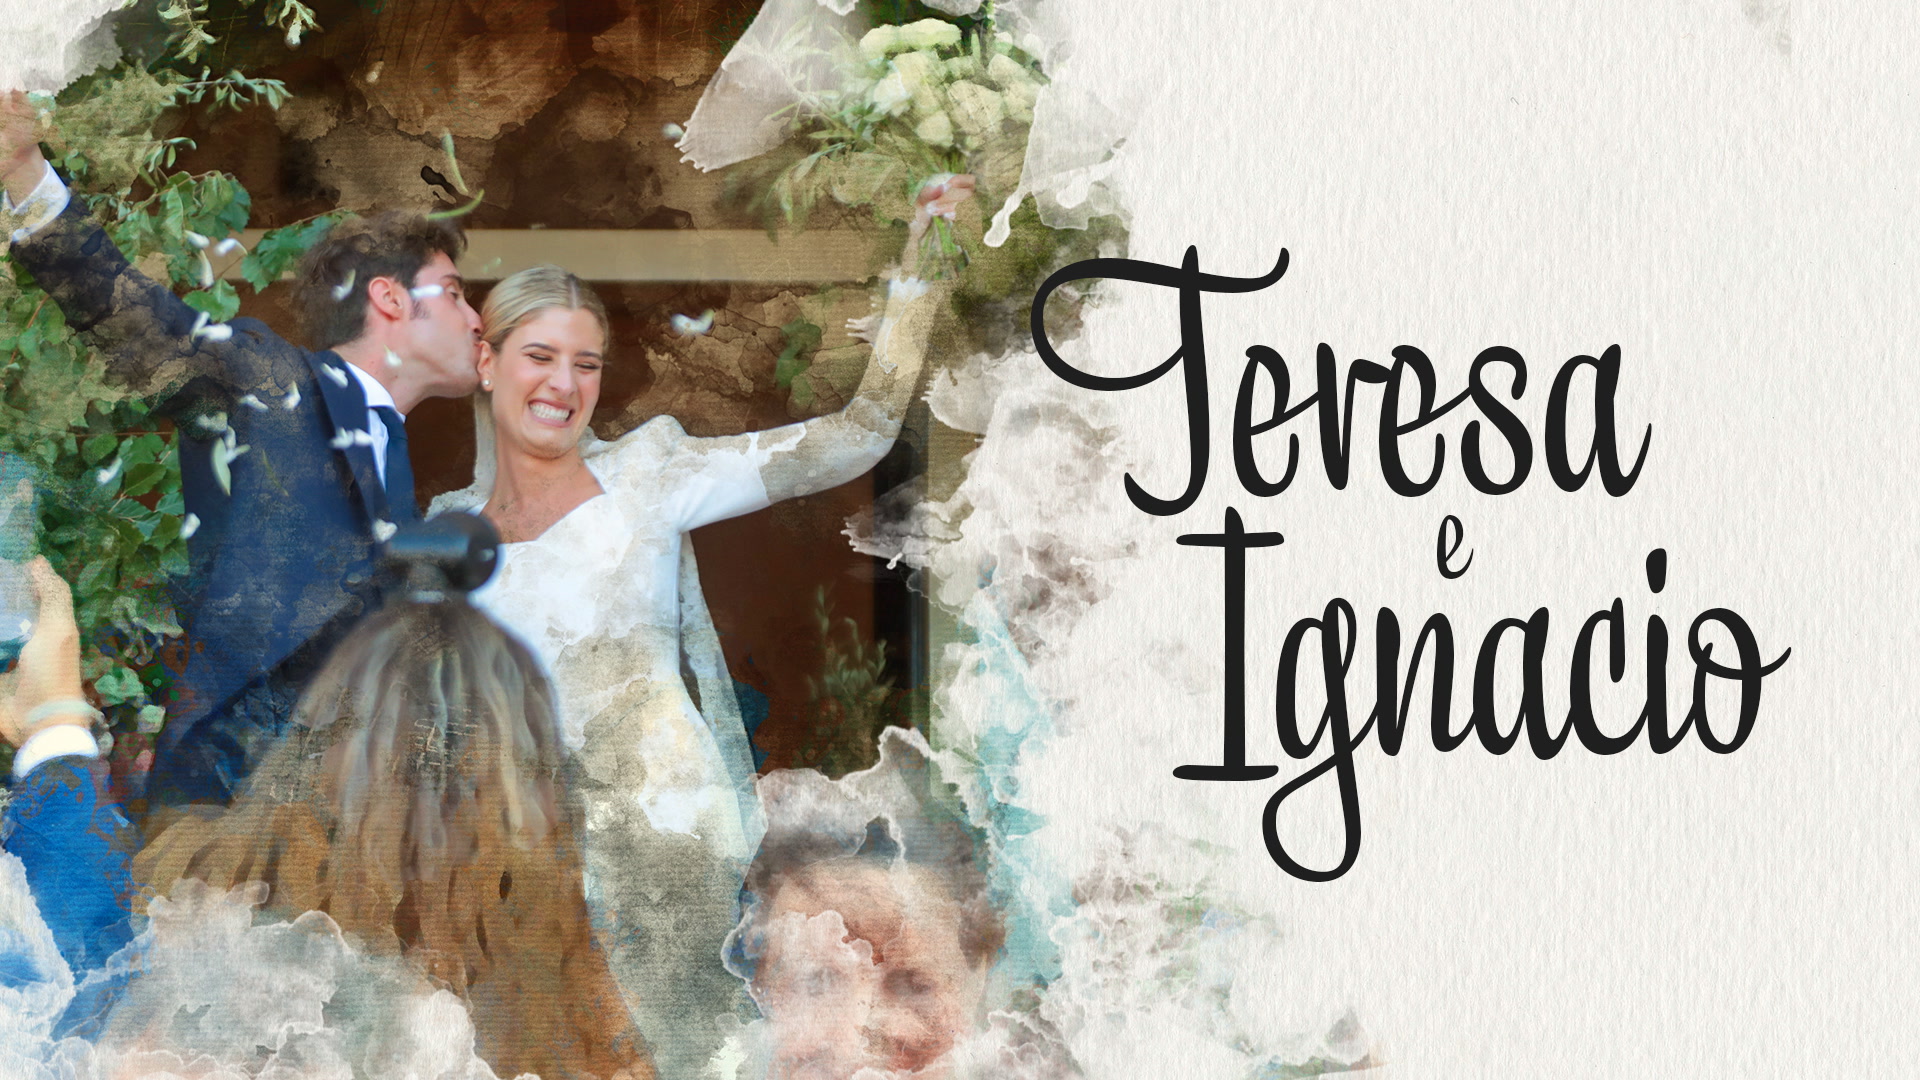 La boda de Teresa Andrés e Ignacio Ayllón